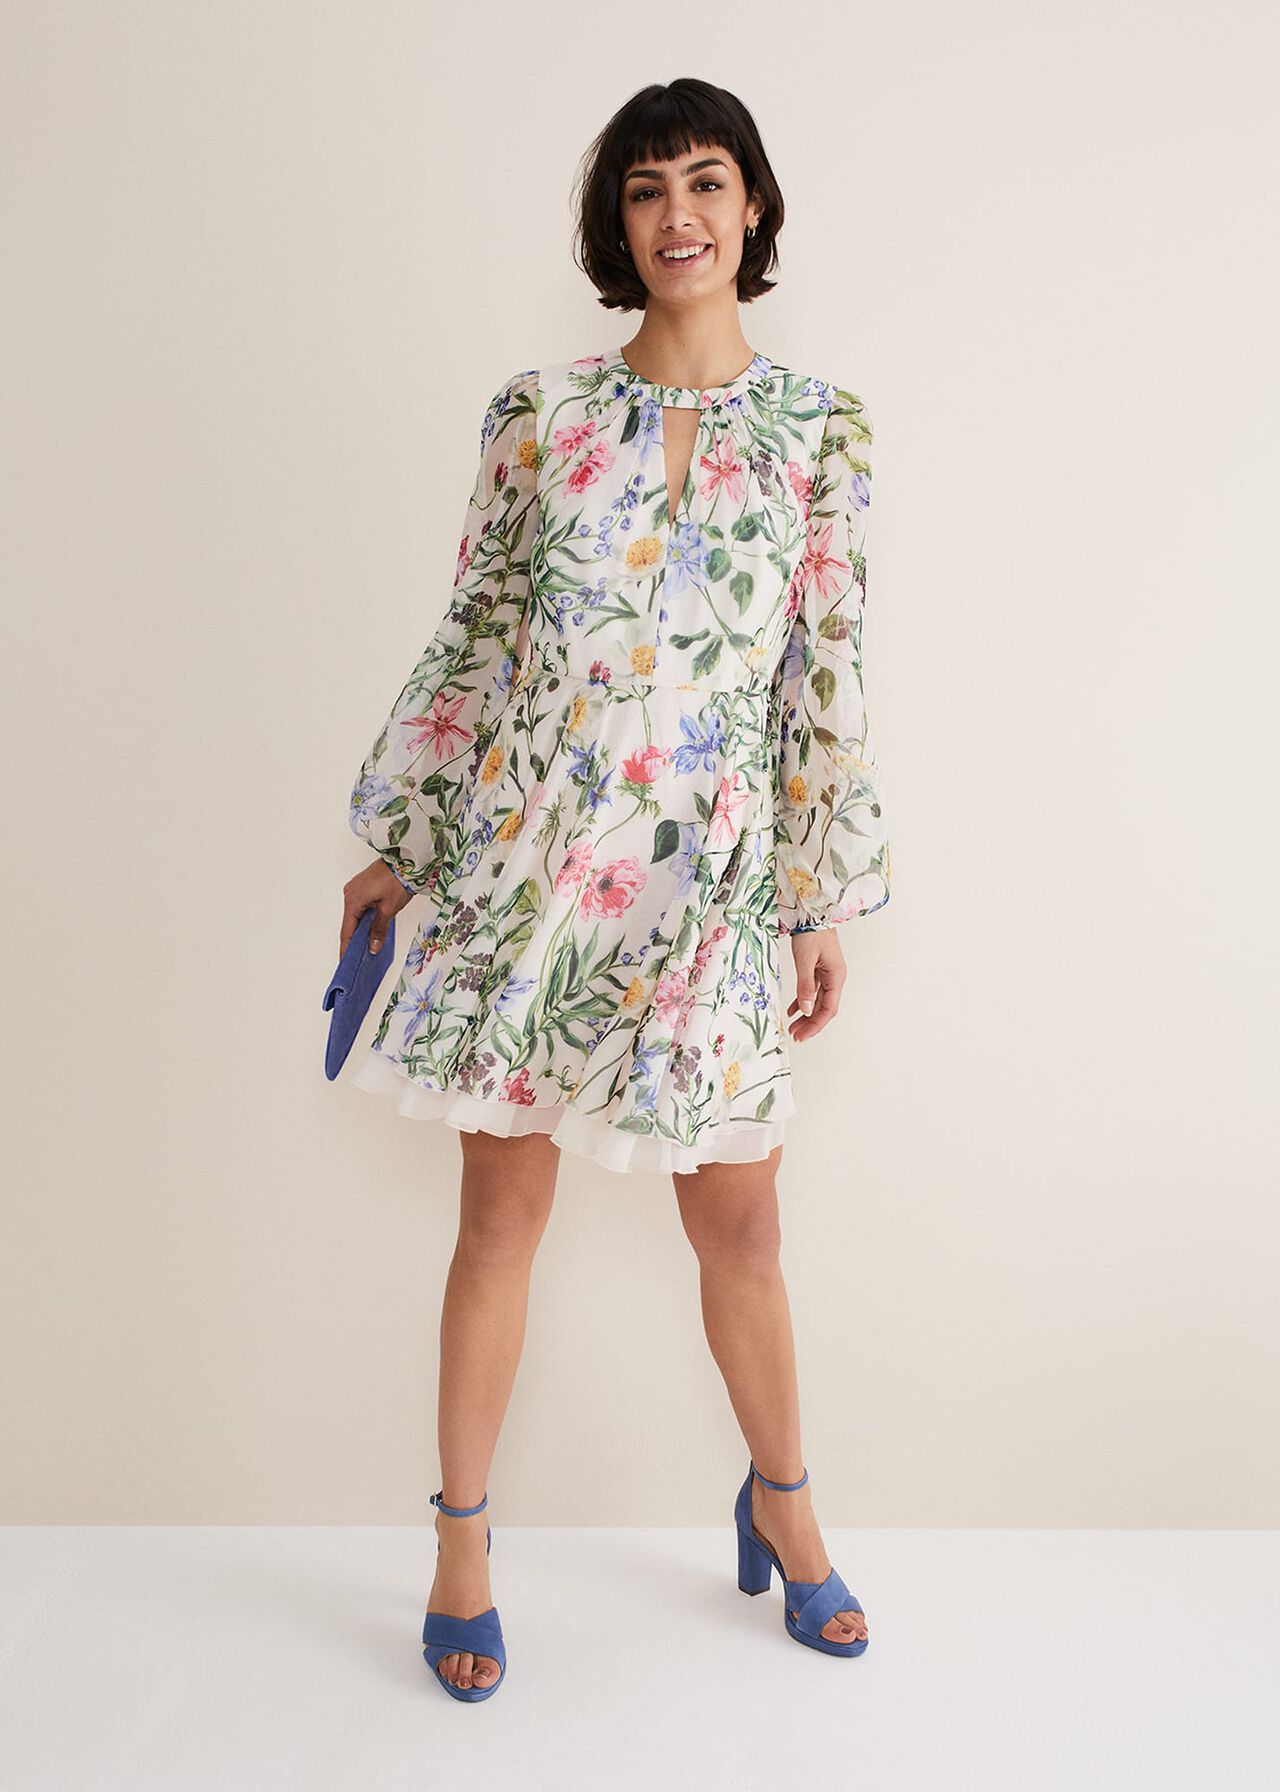 Everleigh Chiffon Floral Mini Dress